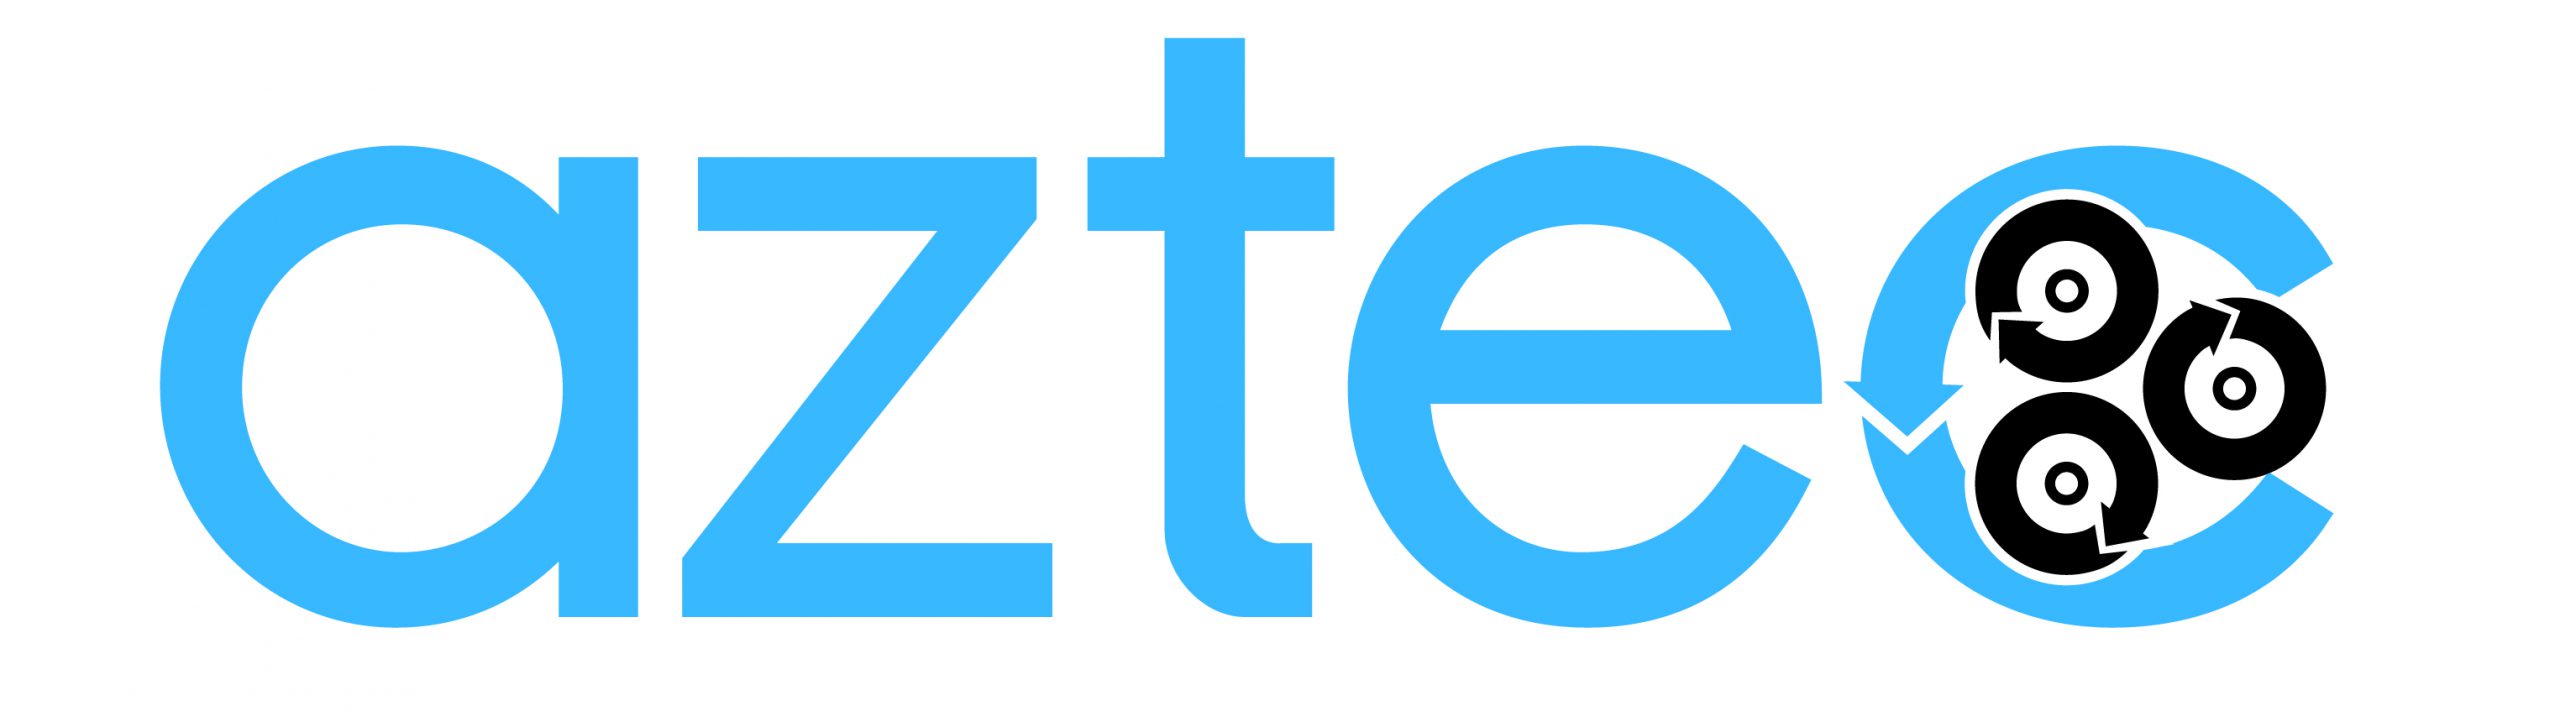 Aztec - logo image